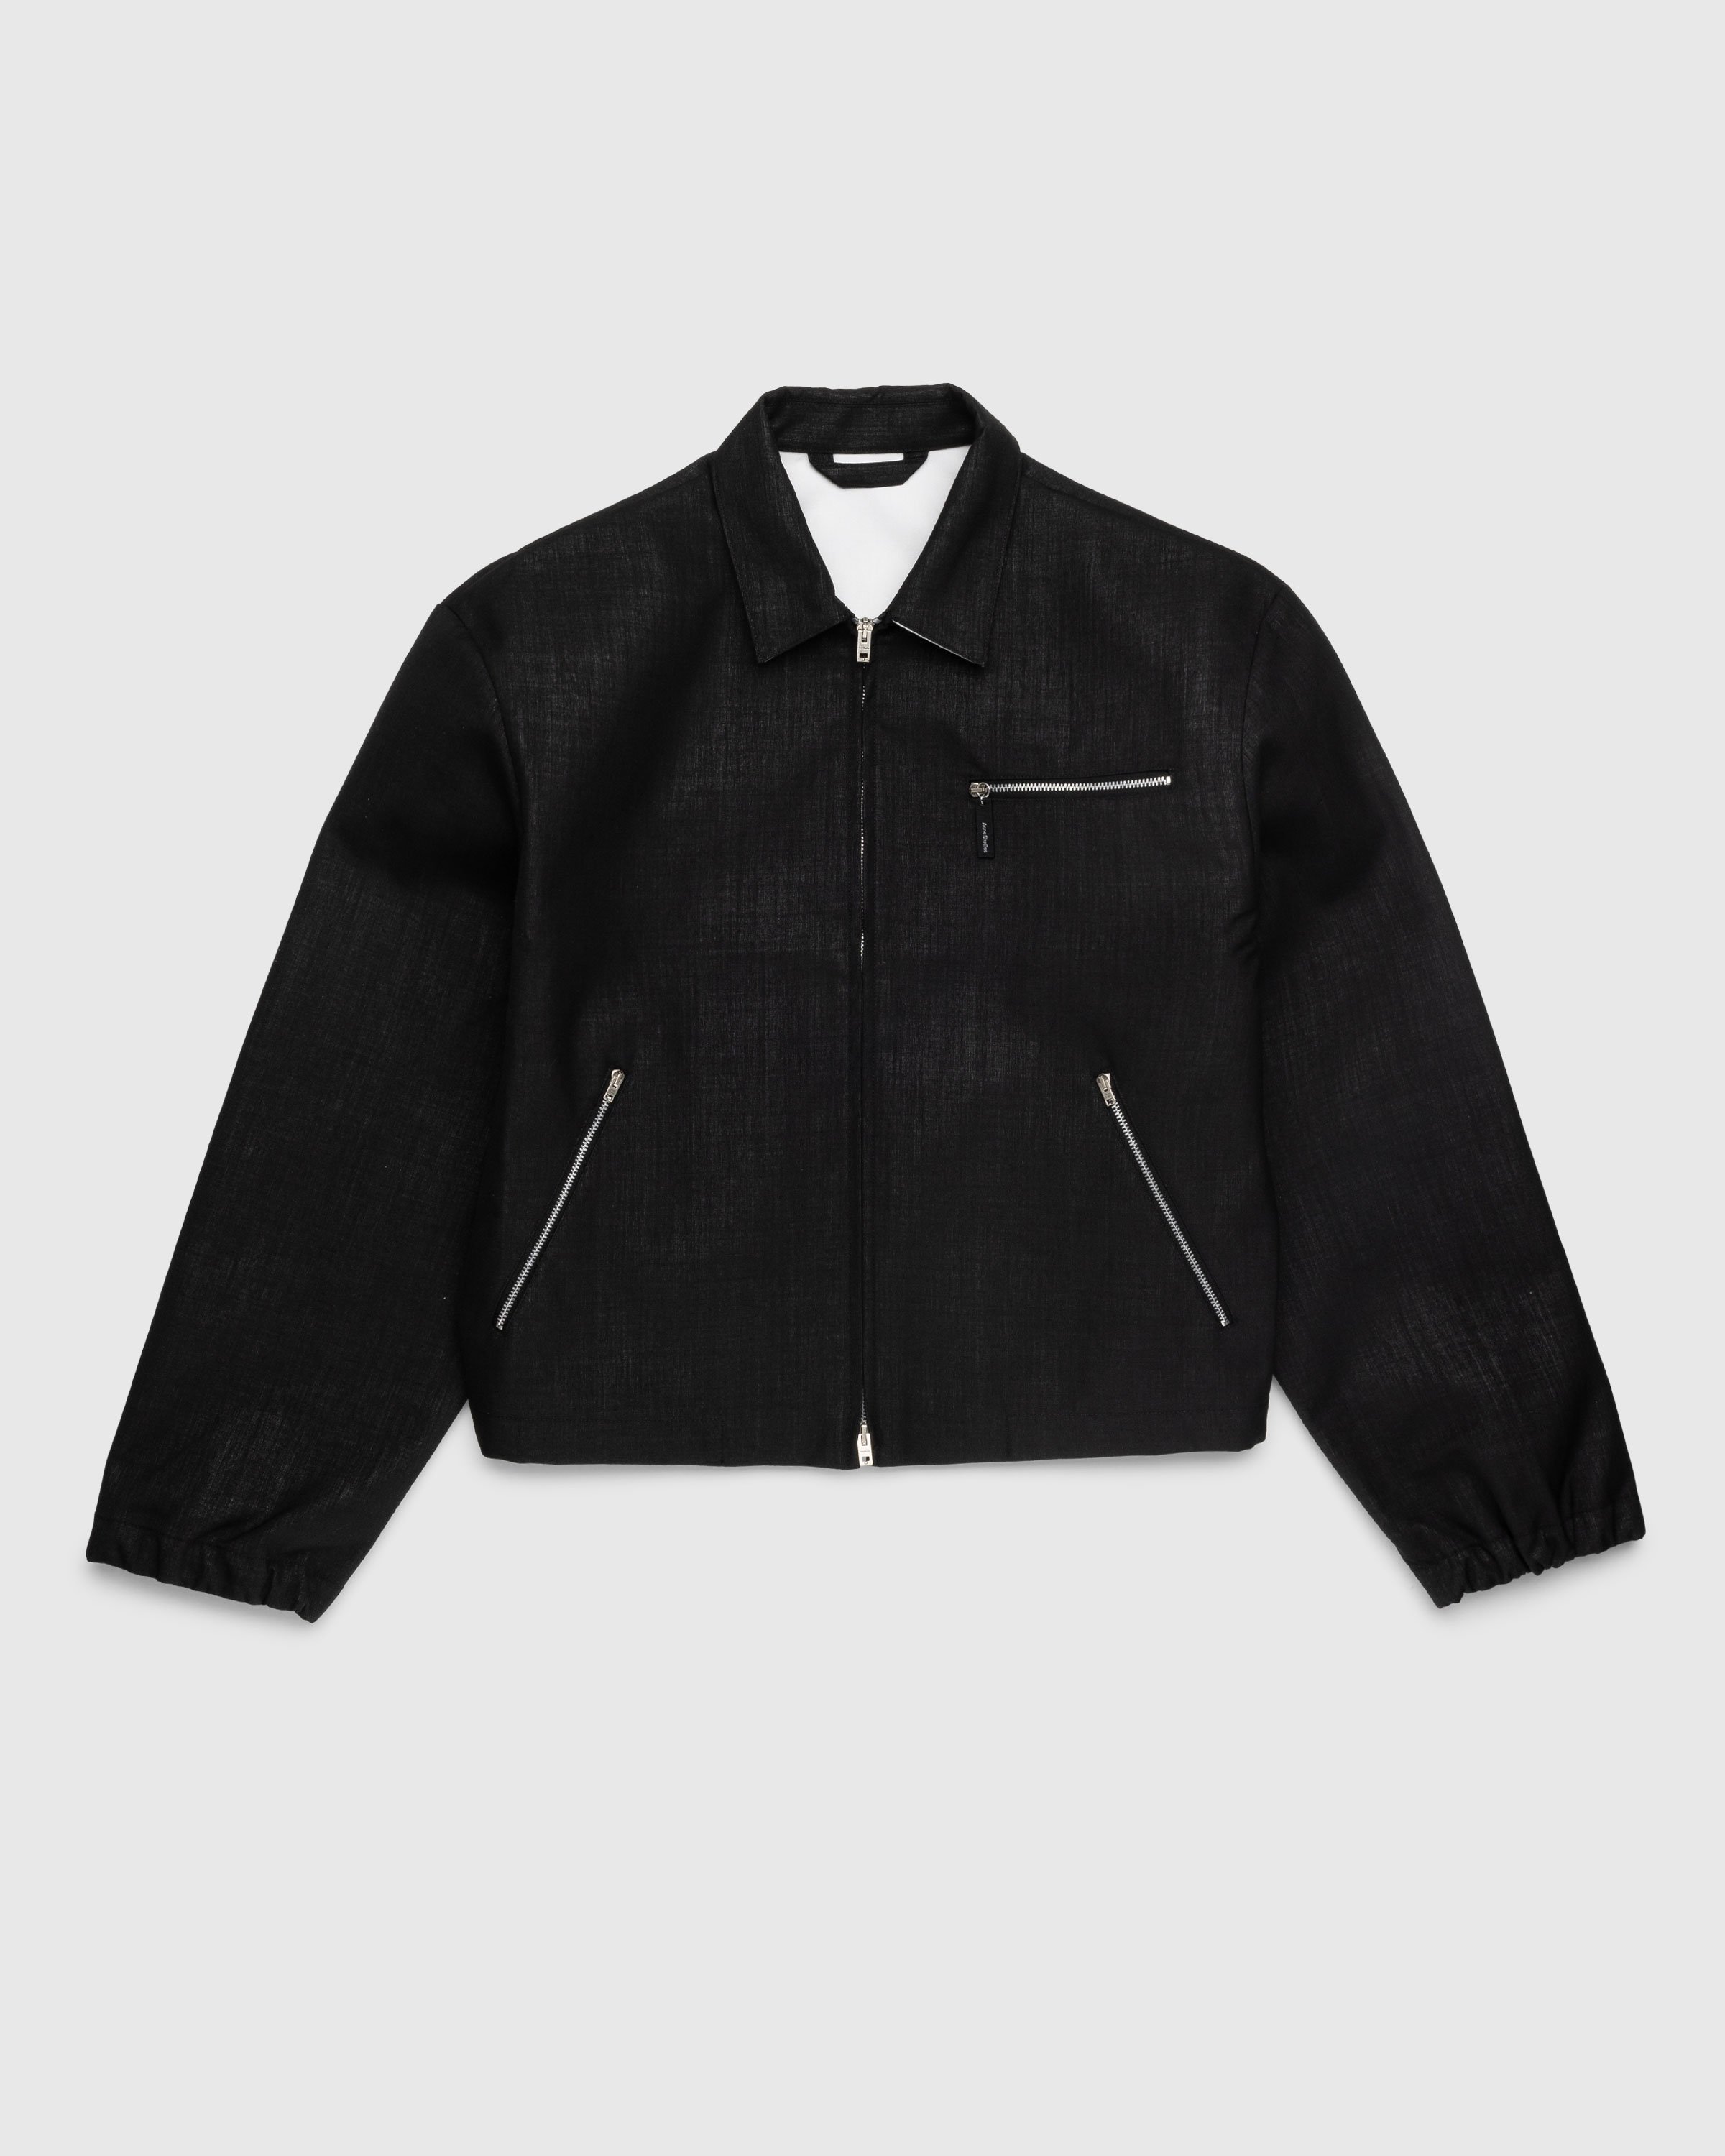 Carhartt WIP – Modular Jacket Rinsed Black